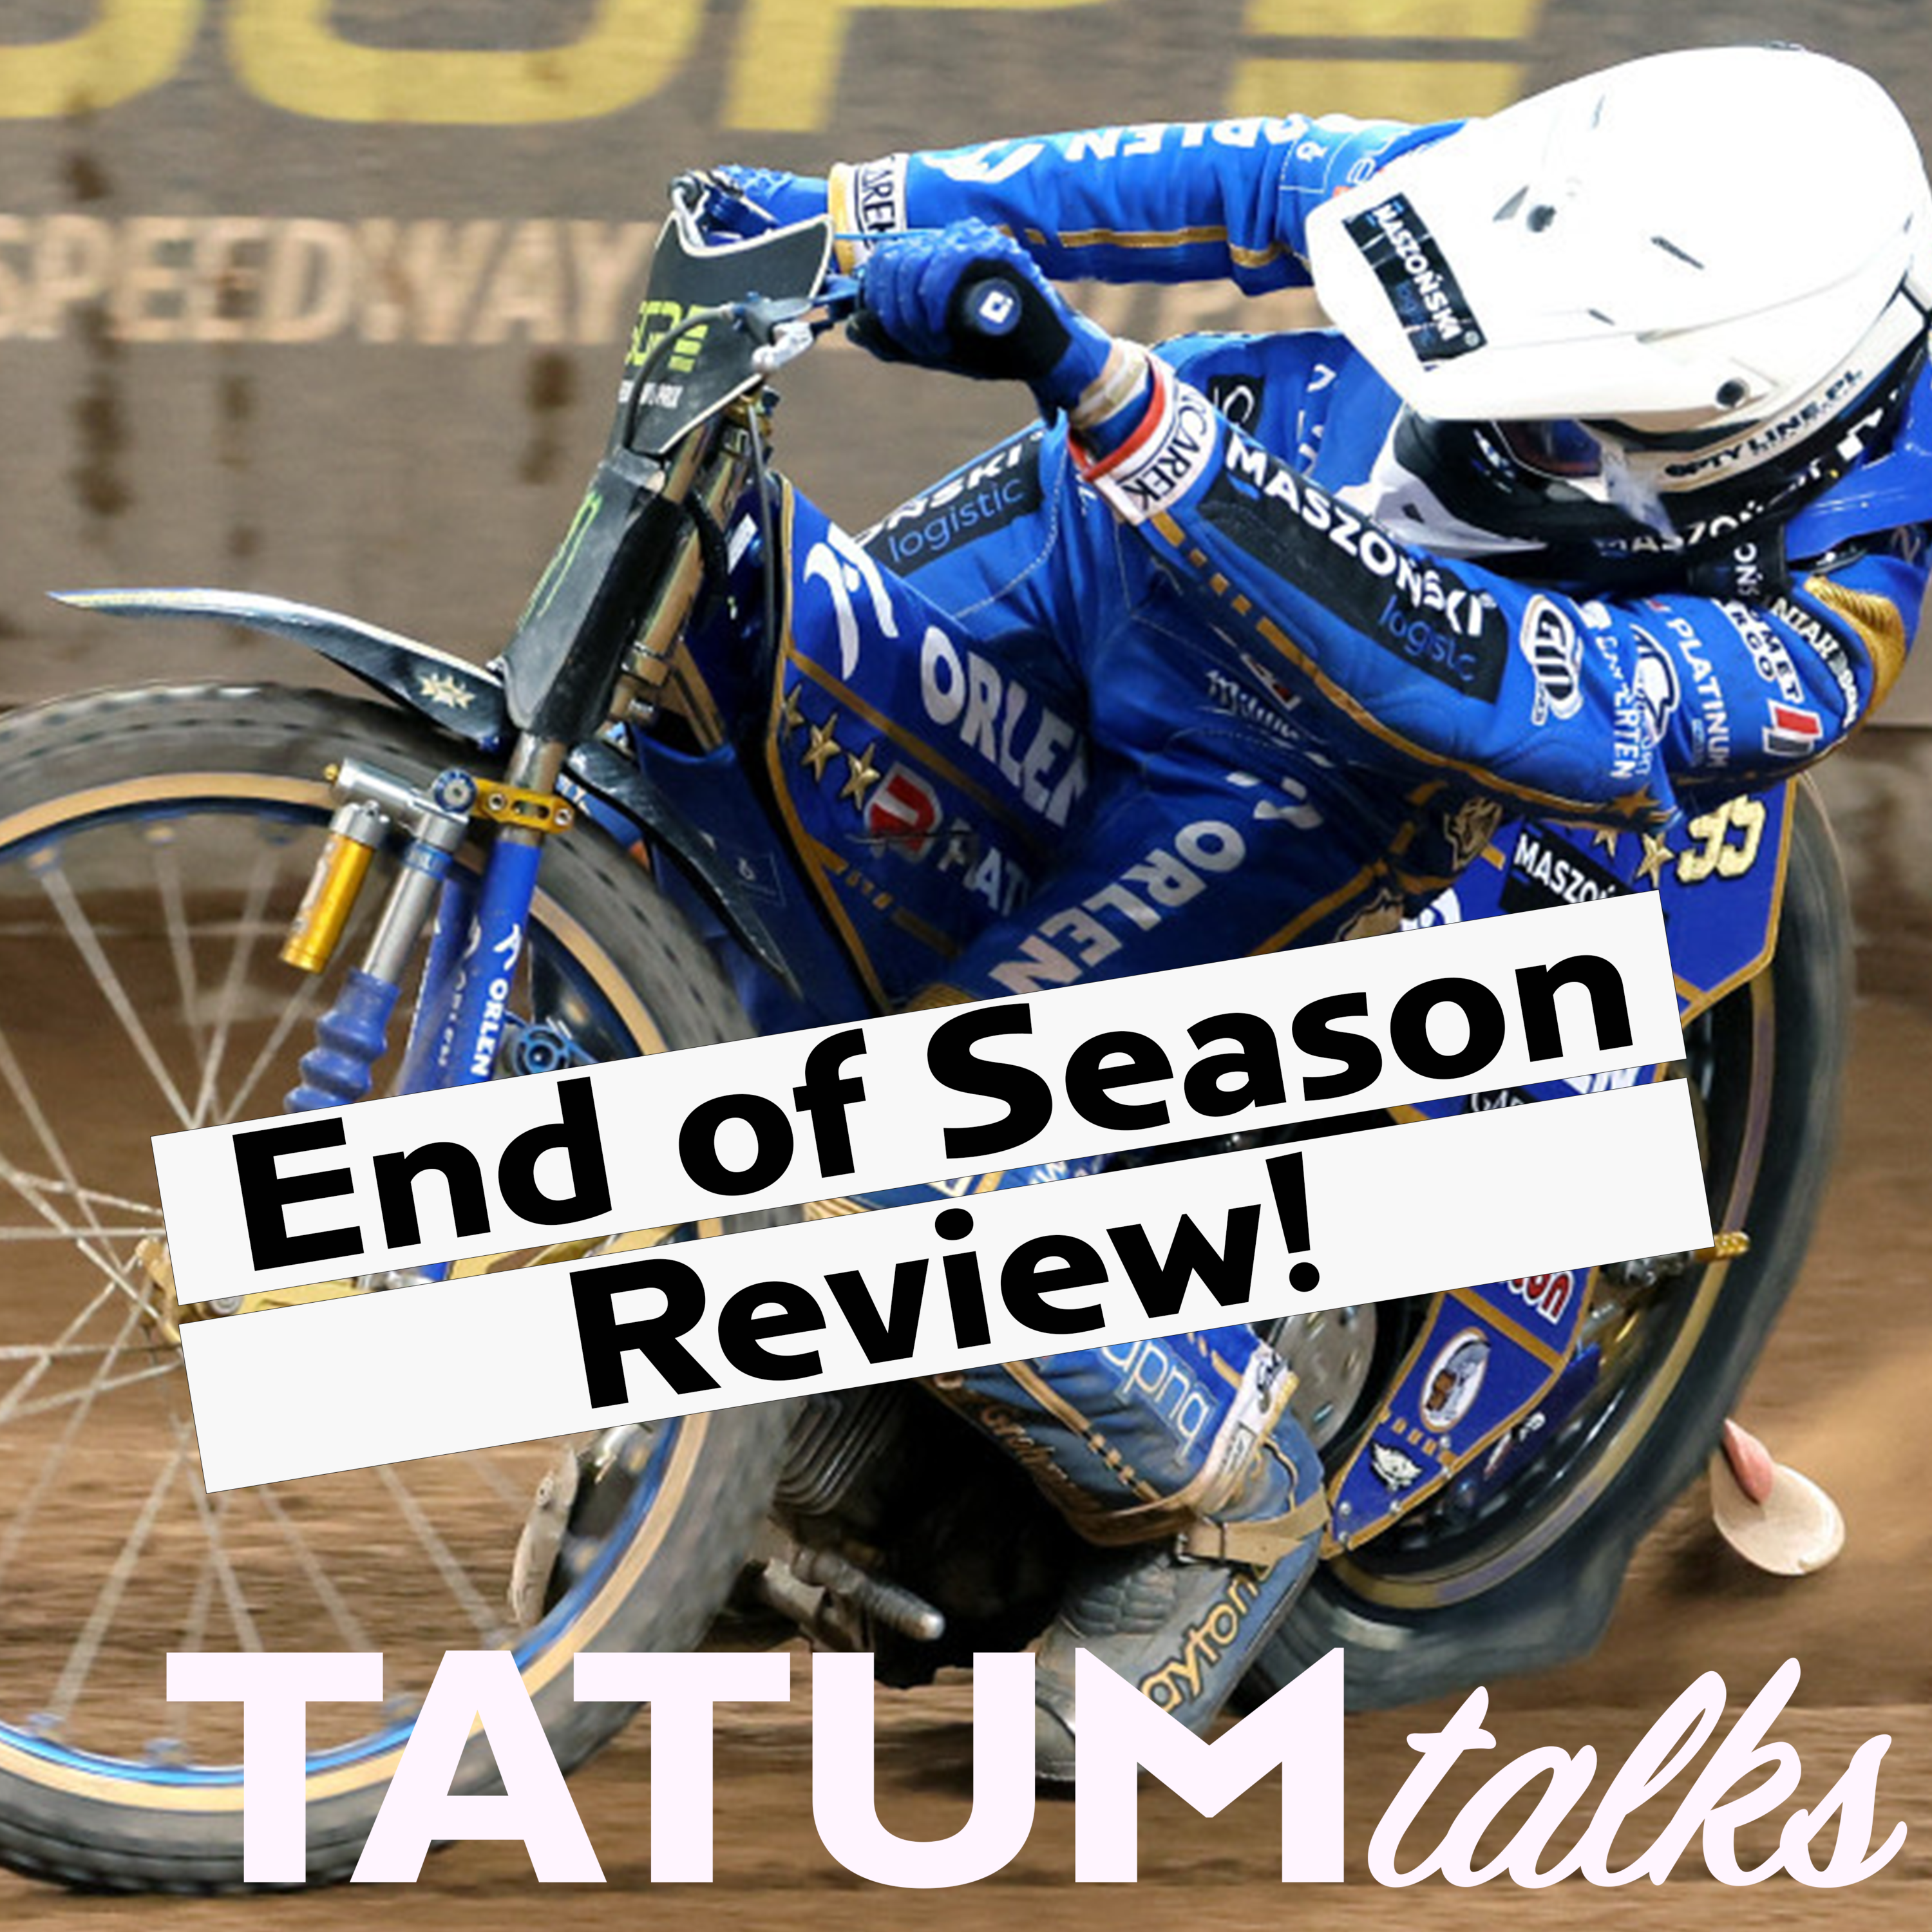 Kelvin's End of Season Review!